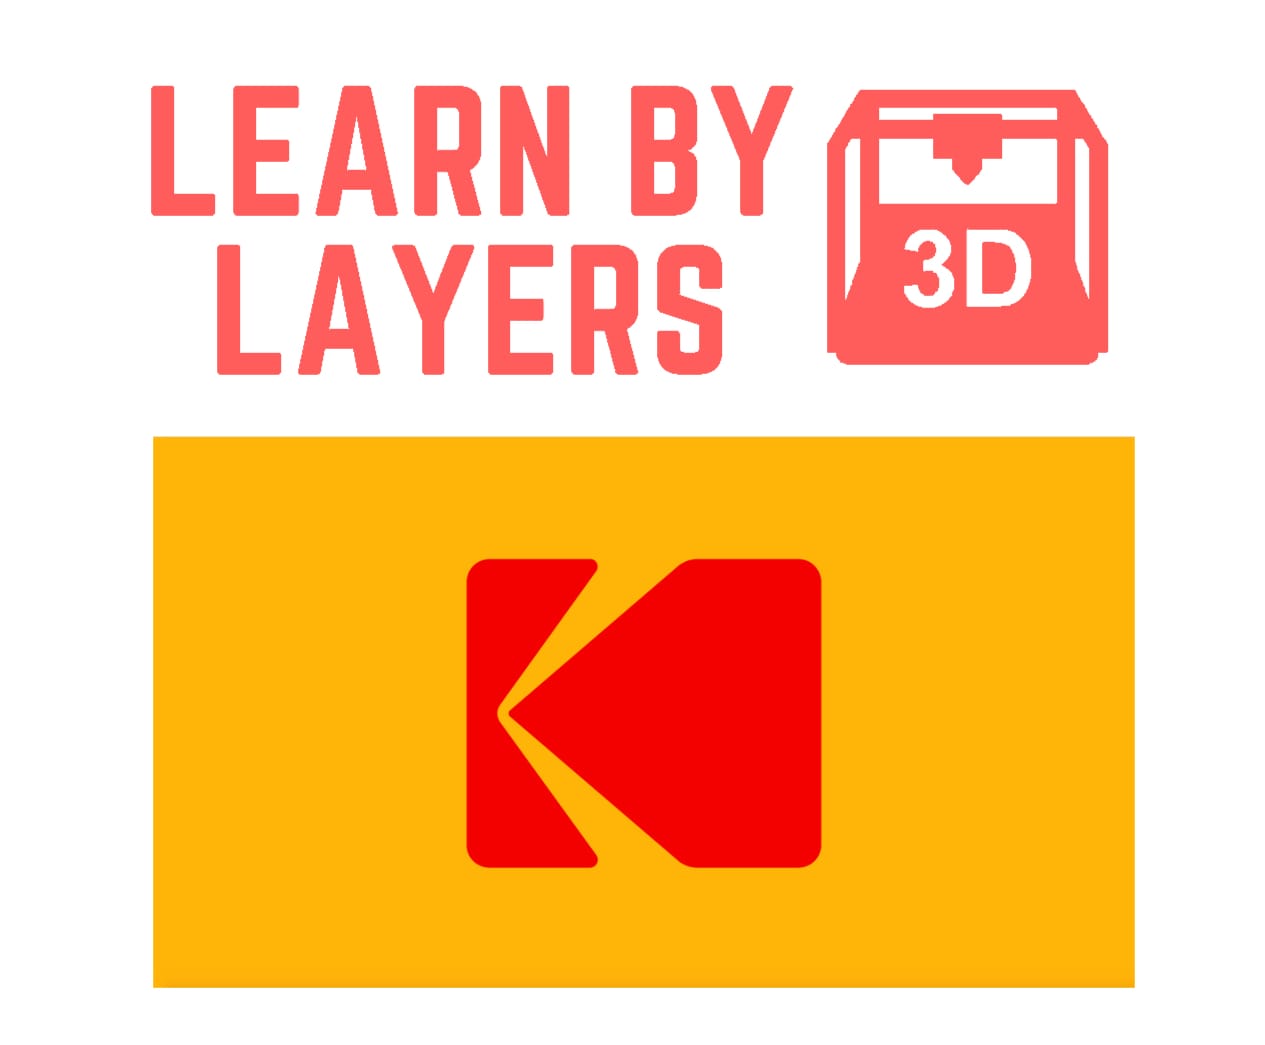  Kodak joins with Learnbylayers 